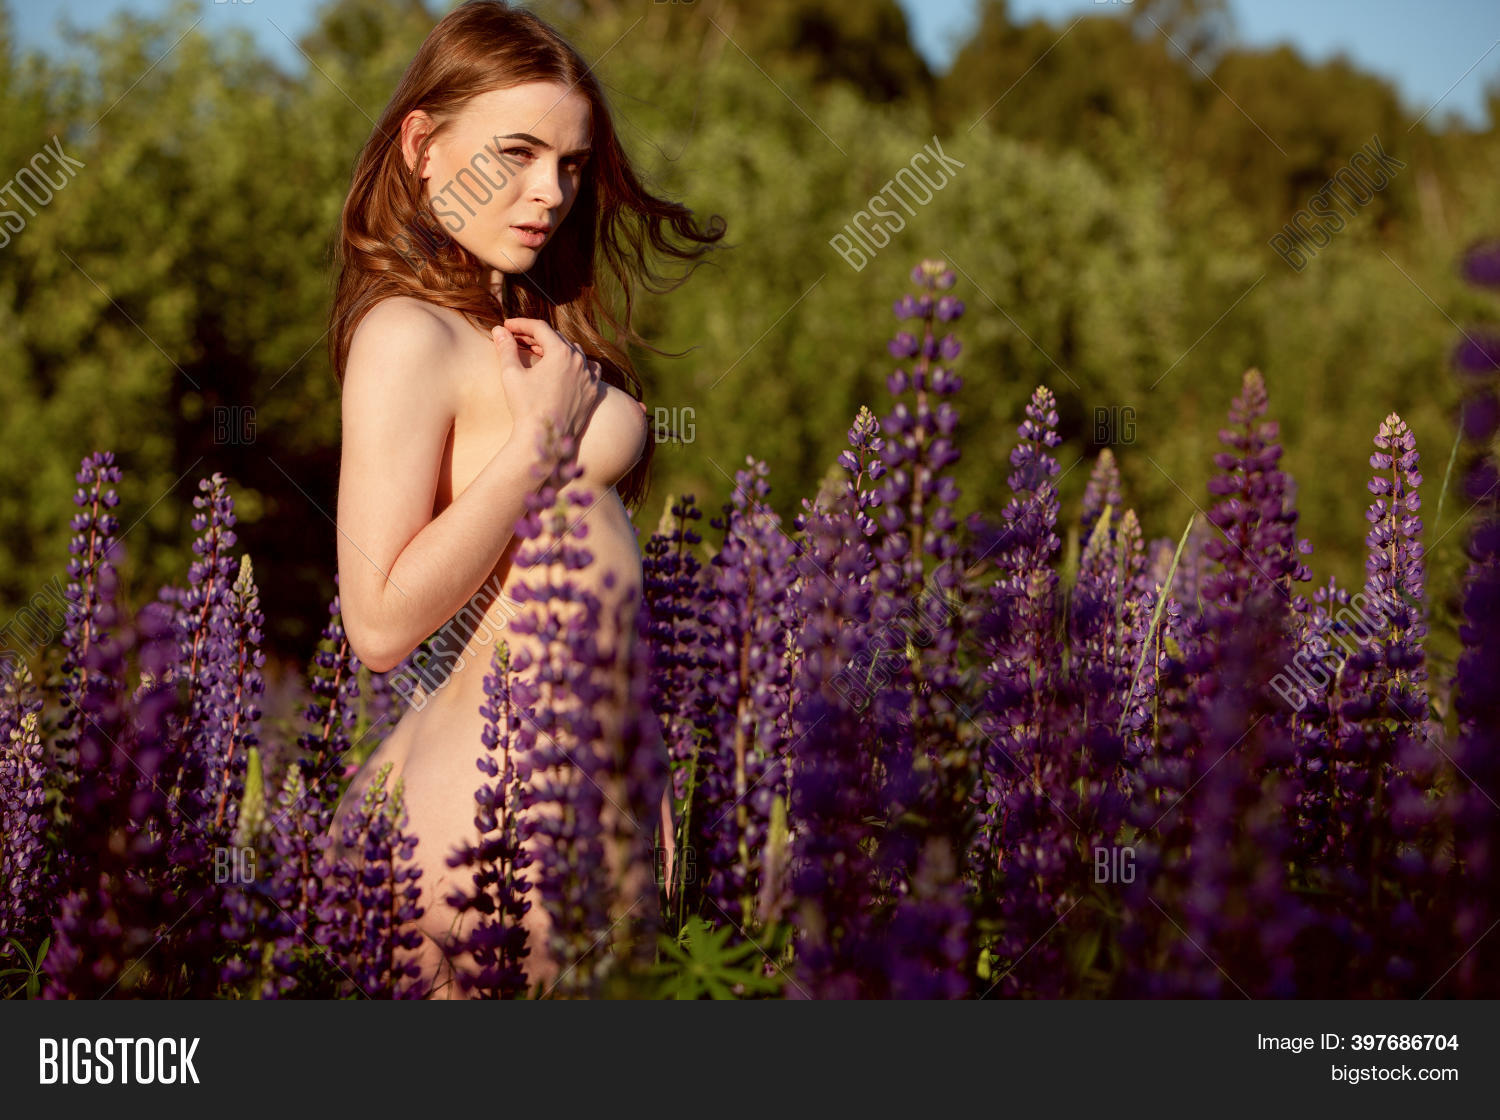 clarice enriquez add nude in a field photo